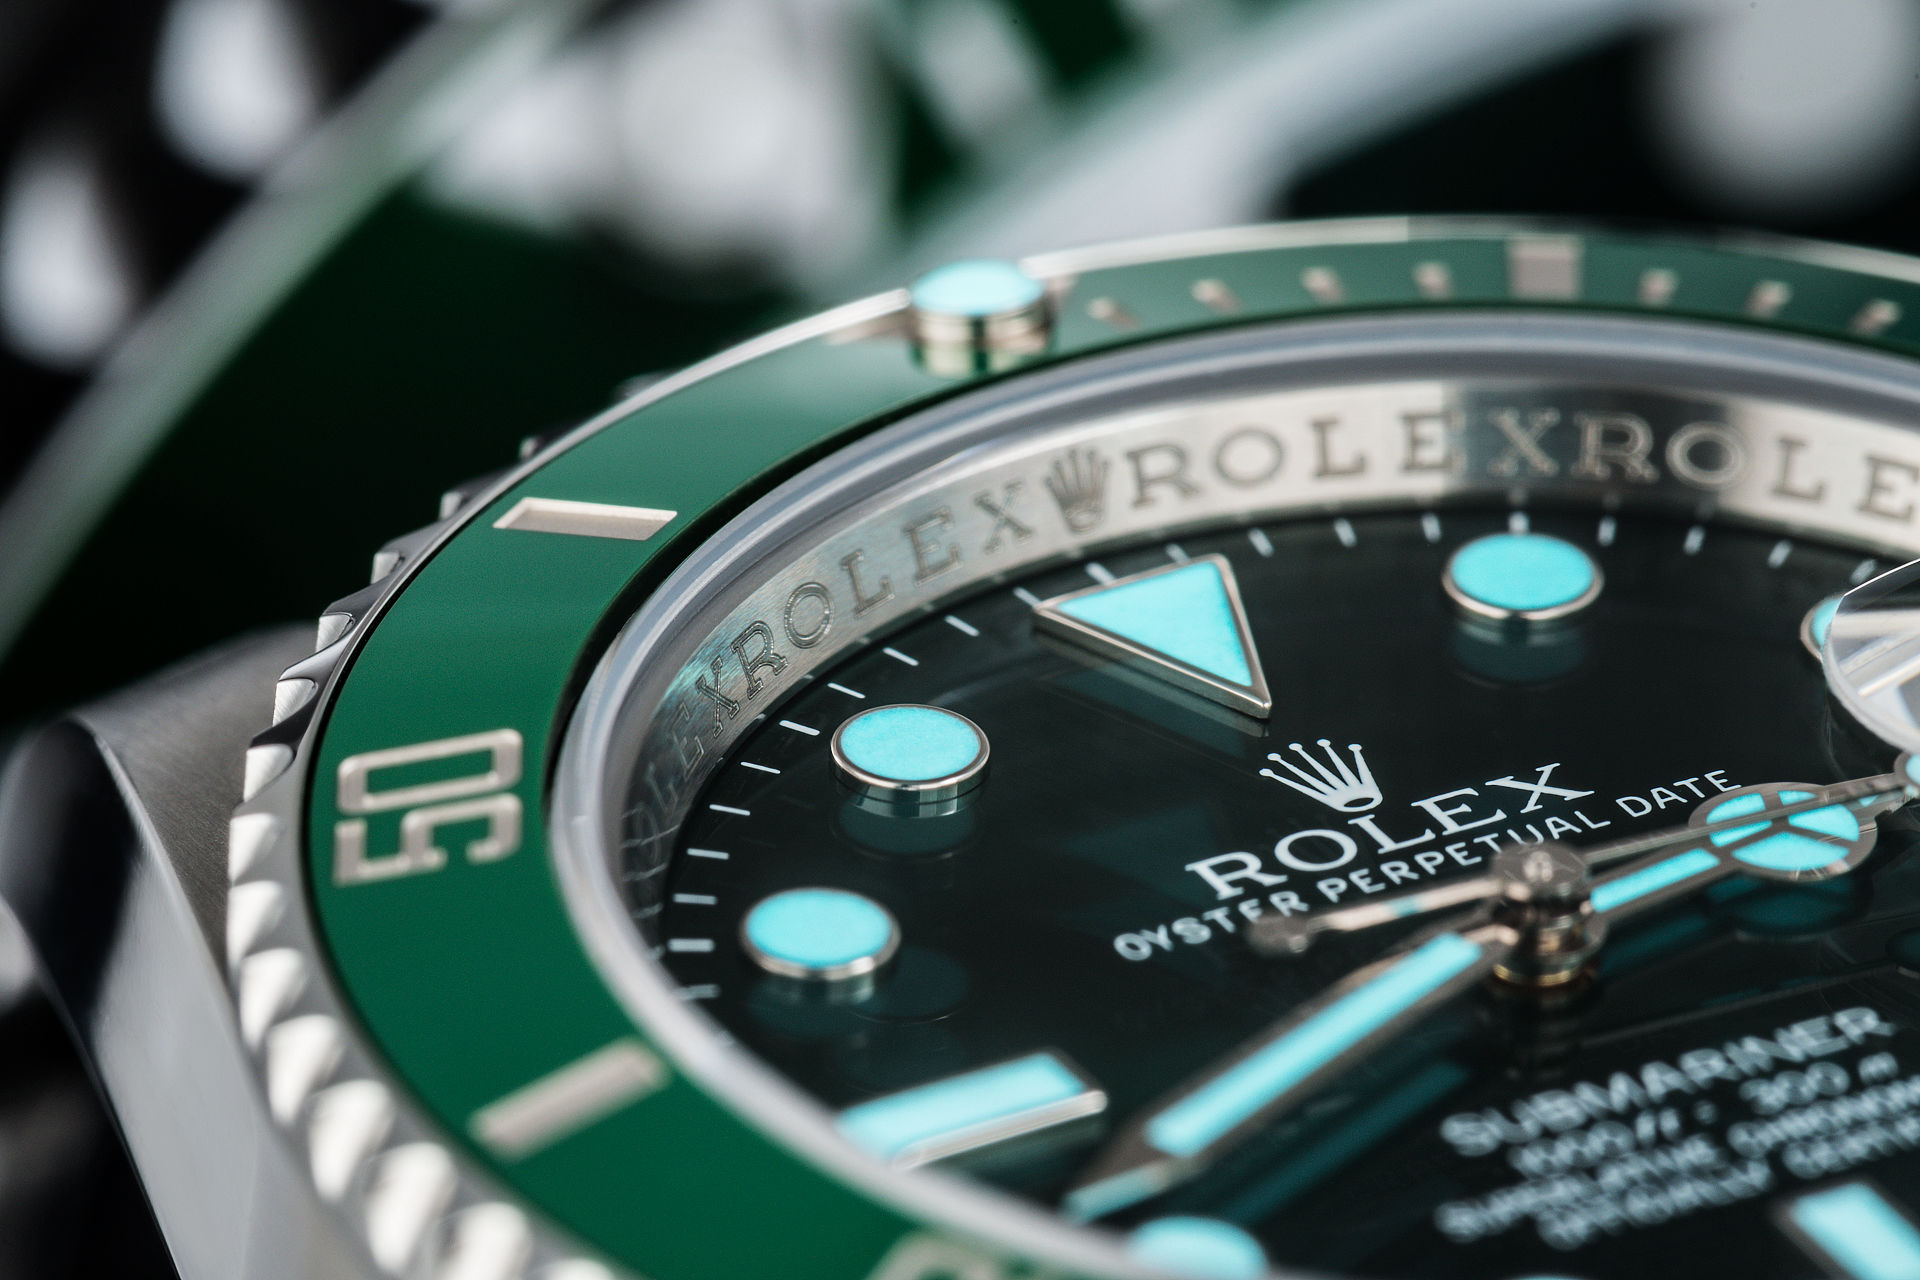 ref 116610LV | Hulk 'Full Set' | Rolex Submariner Date